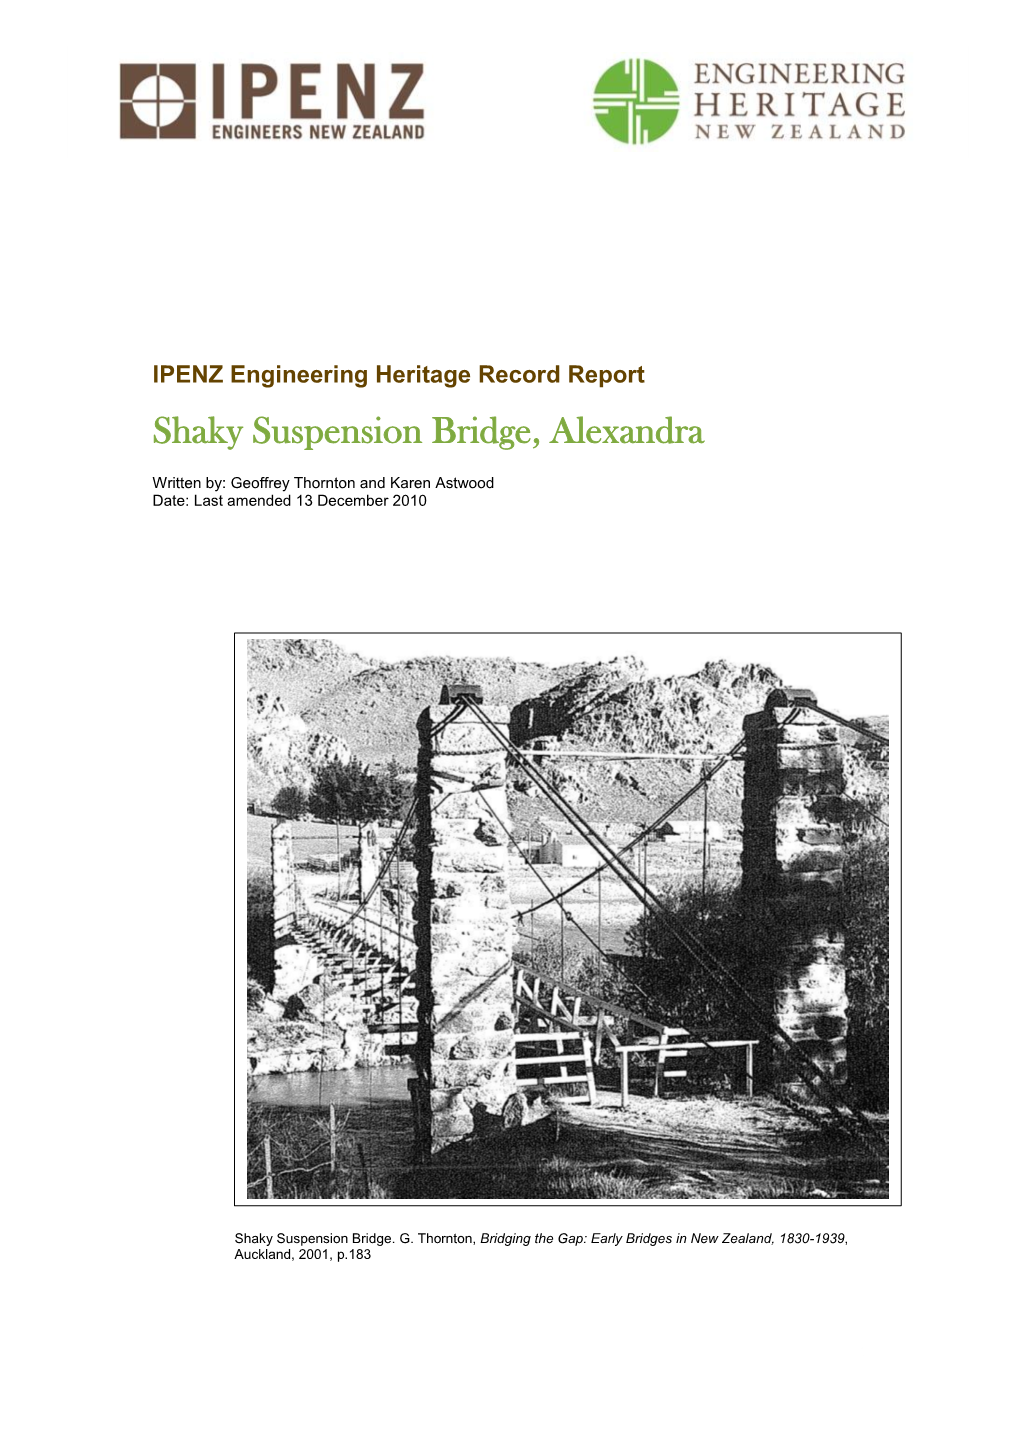 Shaky Suspension Bridge Record Report